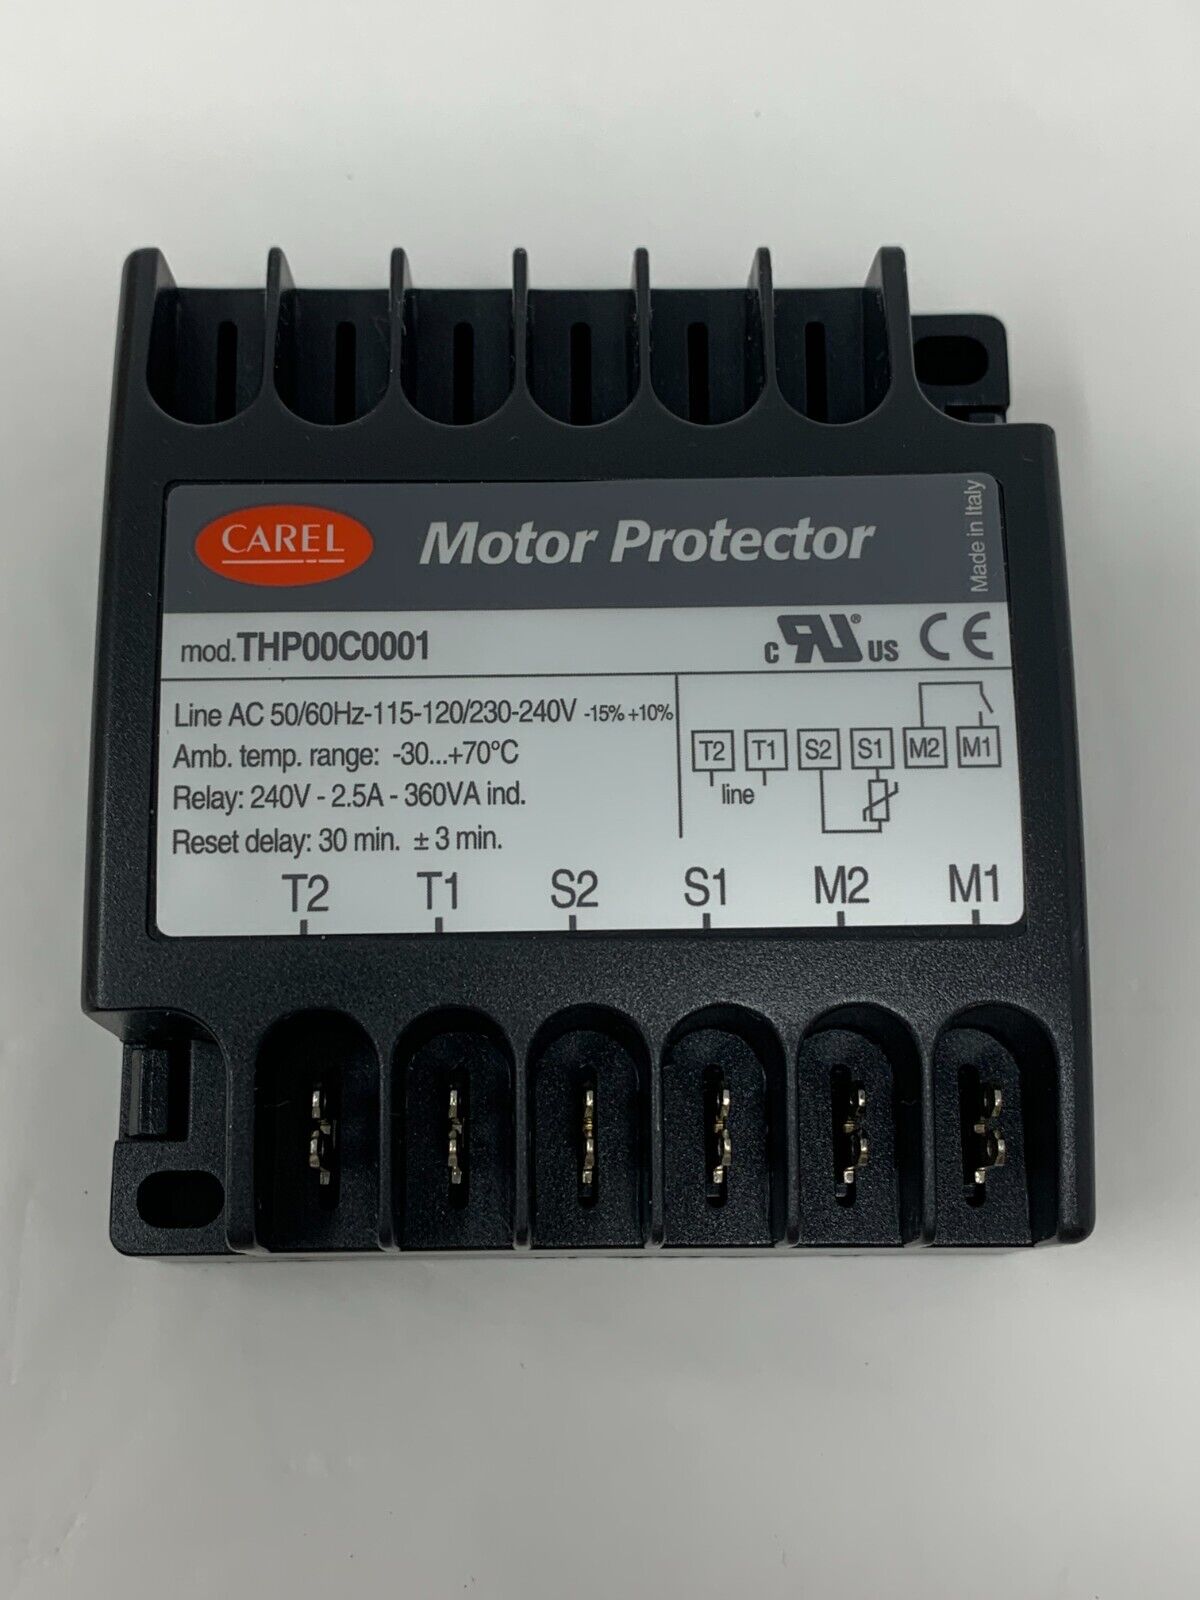 Carel THP00C0001 Compressor Motor Protection Module Part No. 071-0544-01